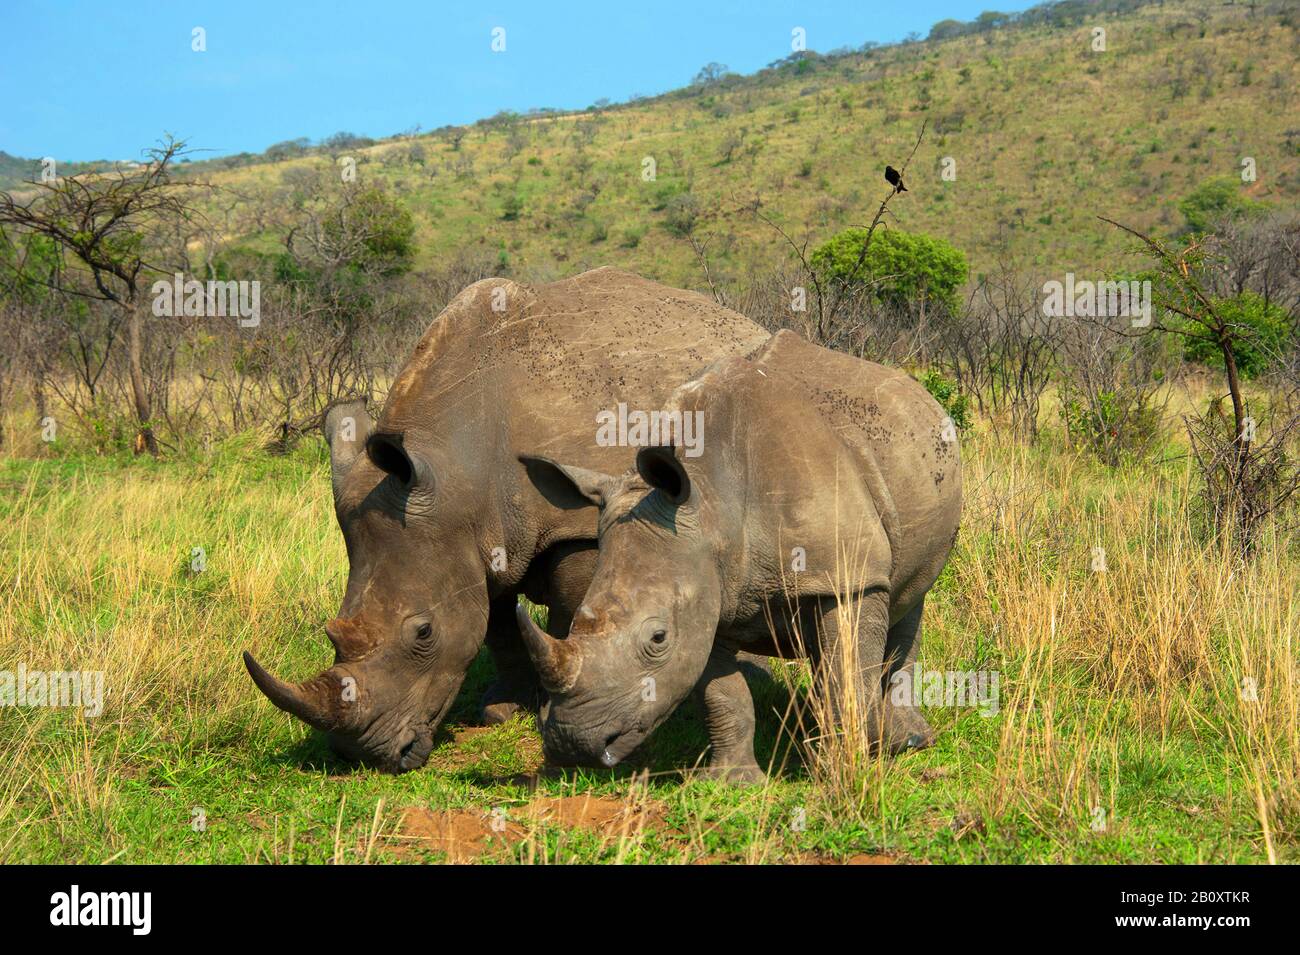 Rinoceronti bianchi, rinoceronti squadrati, rinoceronti d'erba (Ceratotherium simum), madre e bambino che si nutrono insieme nella savana, in Sudafrica, Kwazulu-Natal, Hluhluwe Park Foto Stock